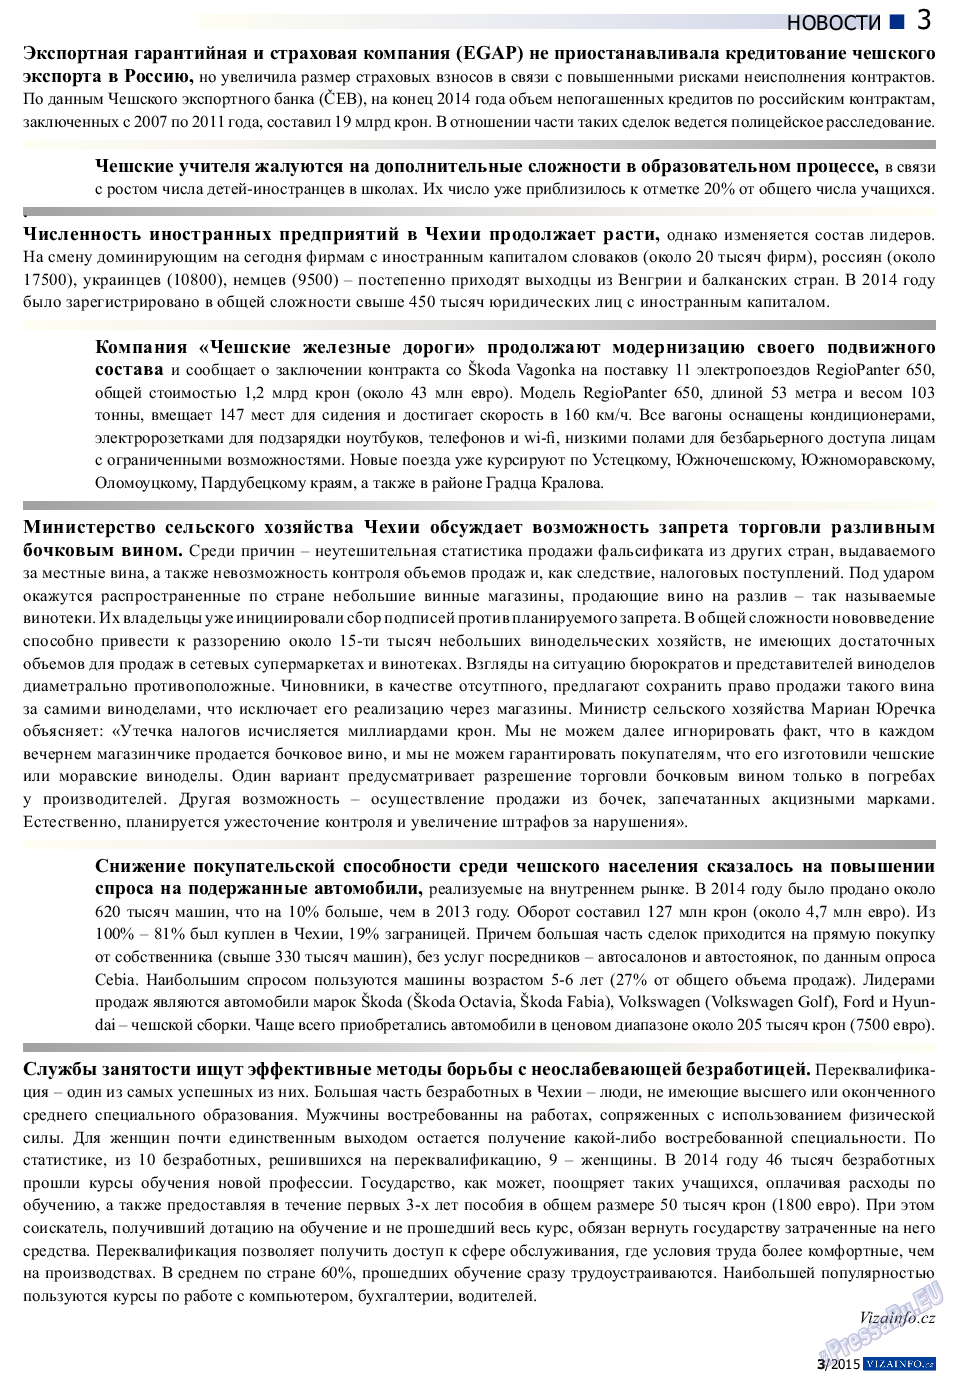 Vizainfo.cz (газета). 2015 год, номер 66, стр. 3